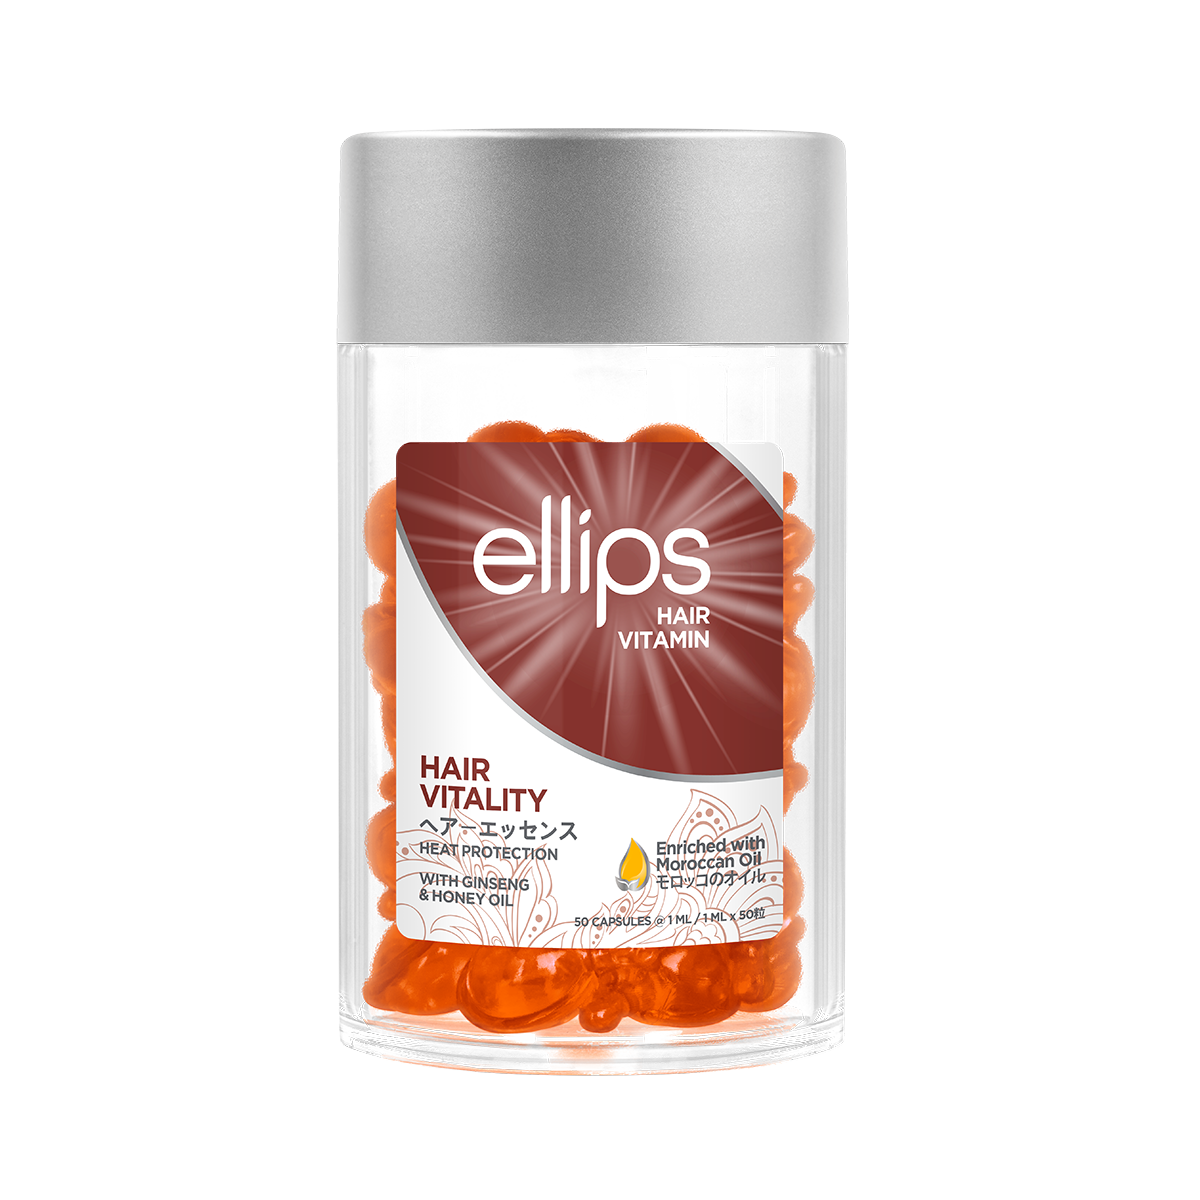 ellips Orange Hair Vitality - Pot de 50 capsules